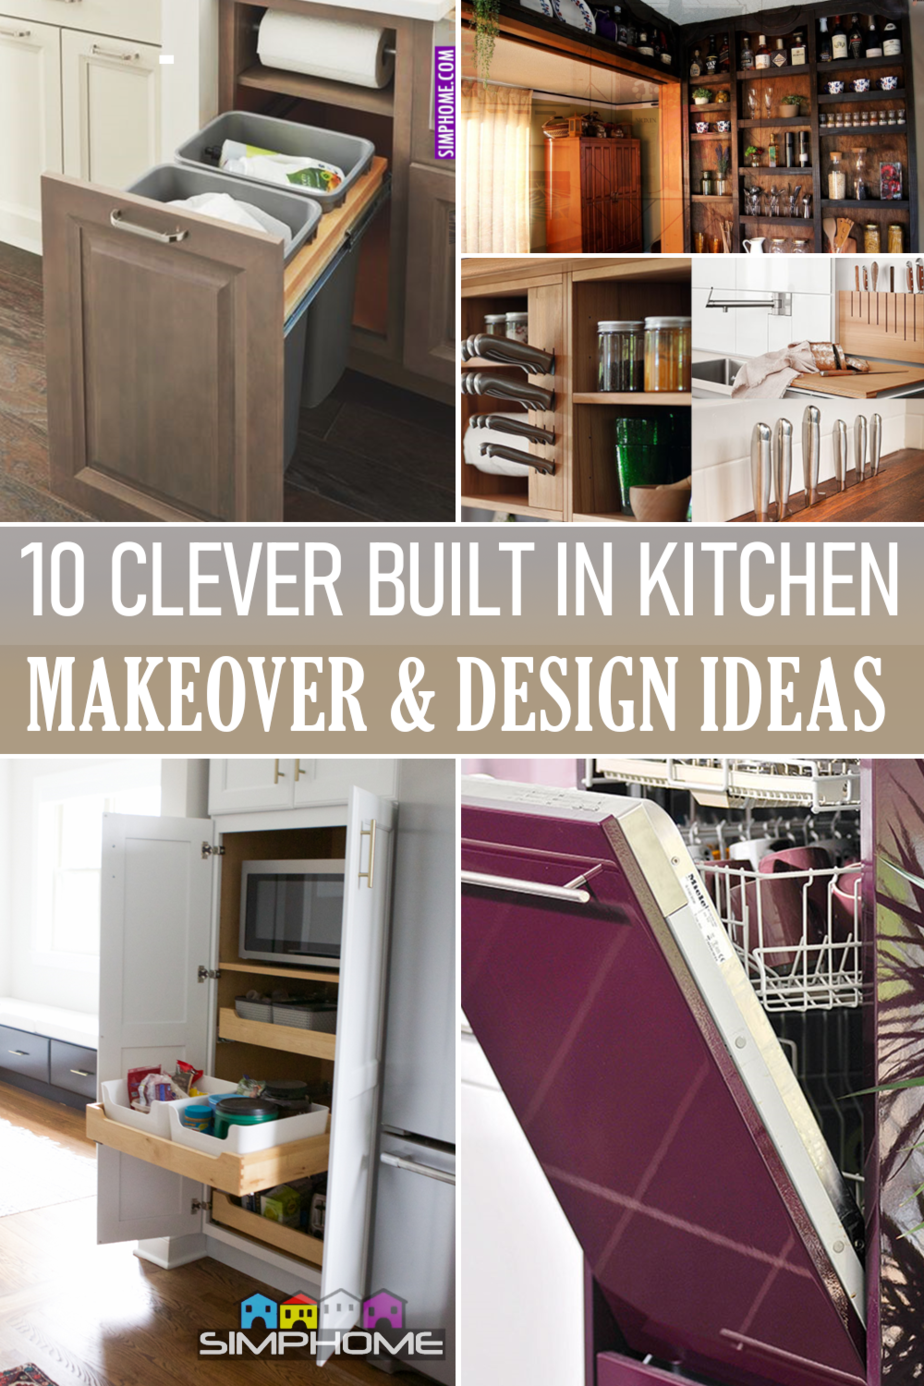 10 Built In Kitchen Design Ideas via Simphome.comFeatured